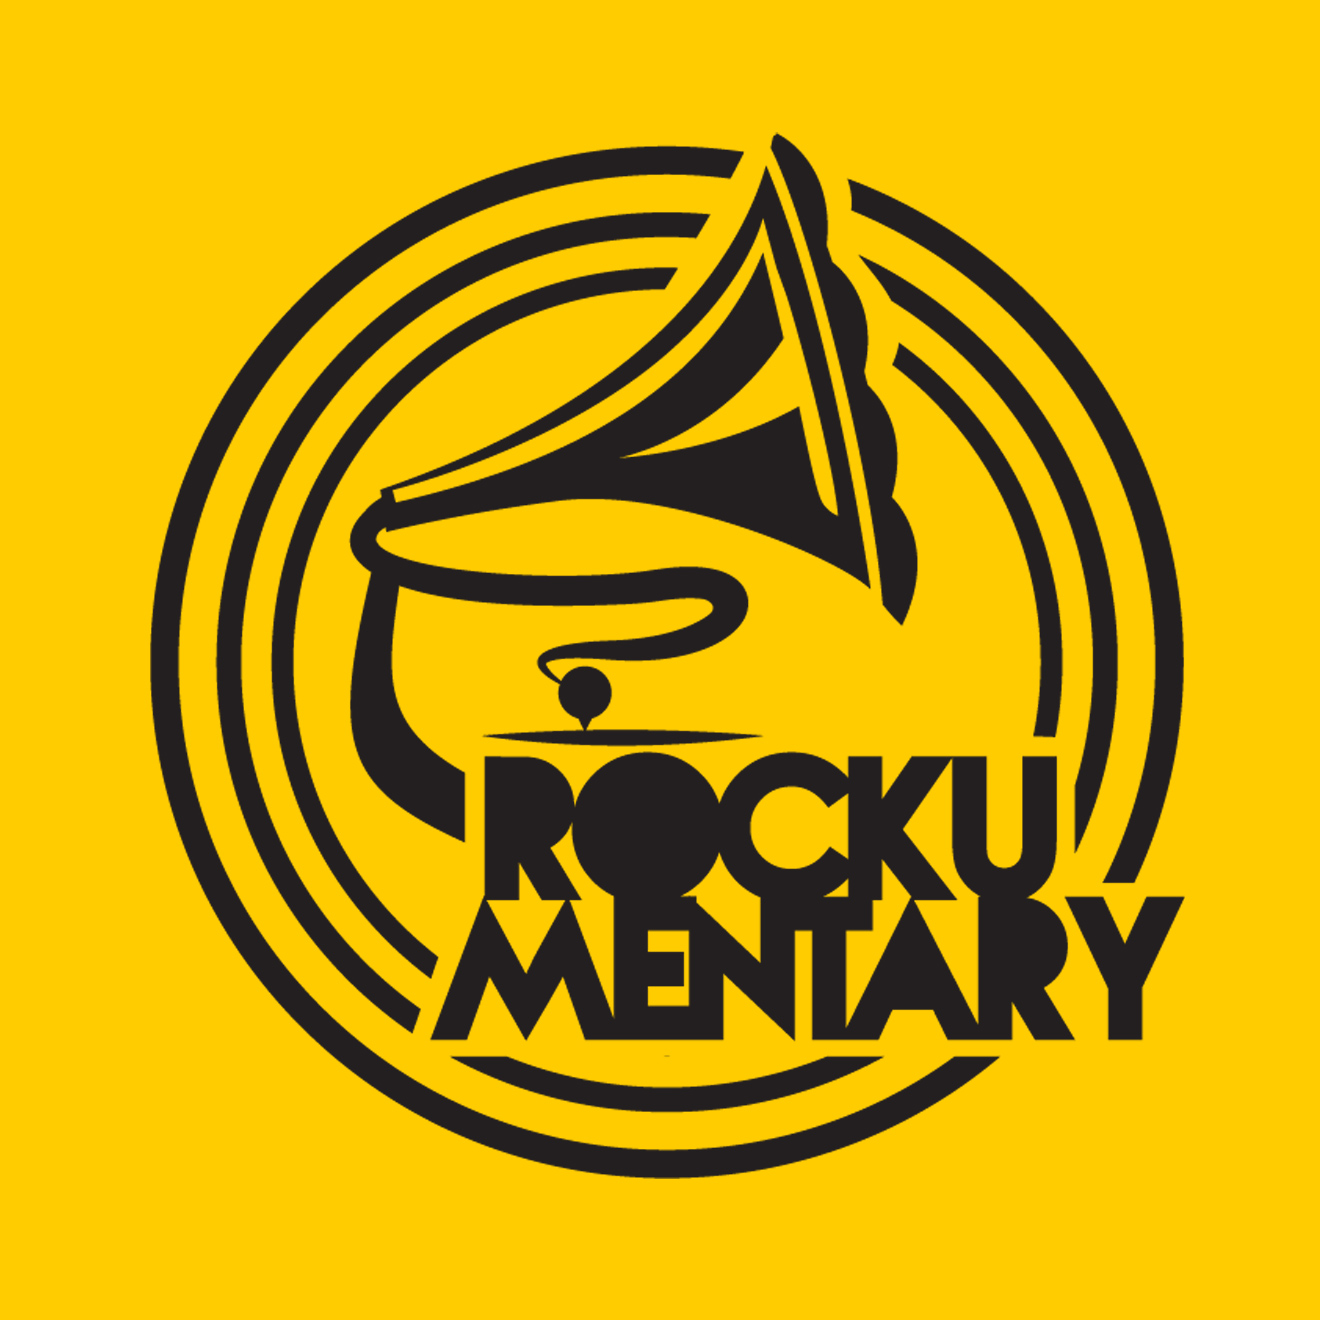 rockumentary logo design